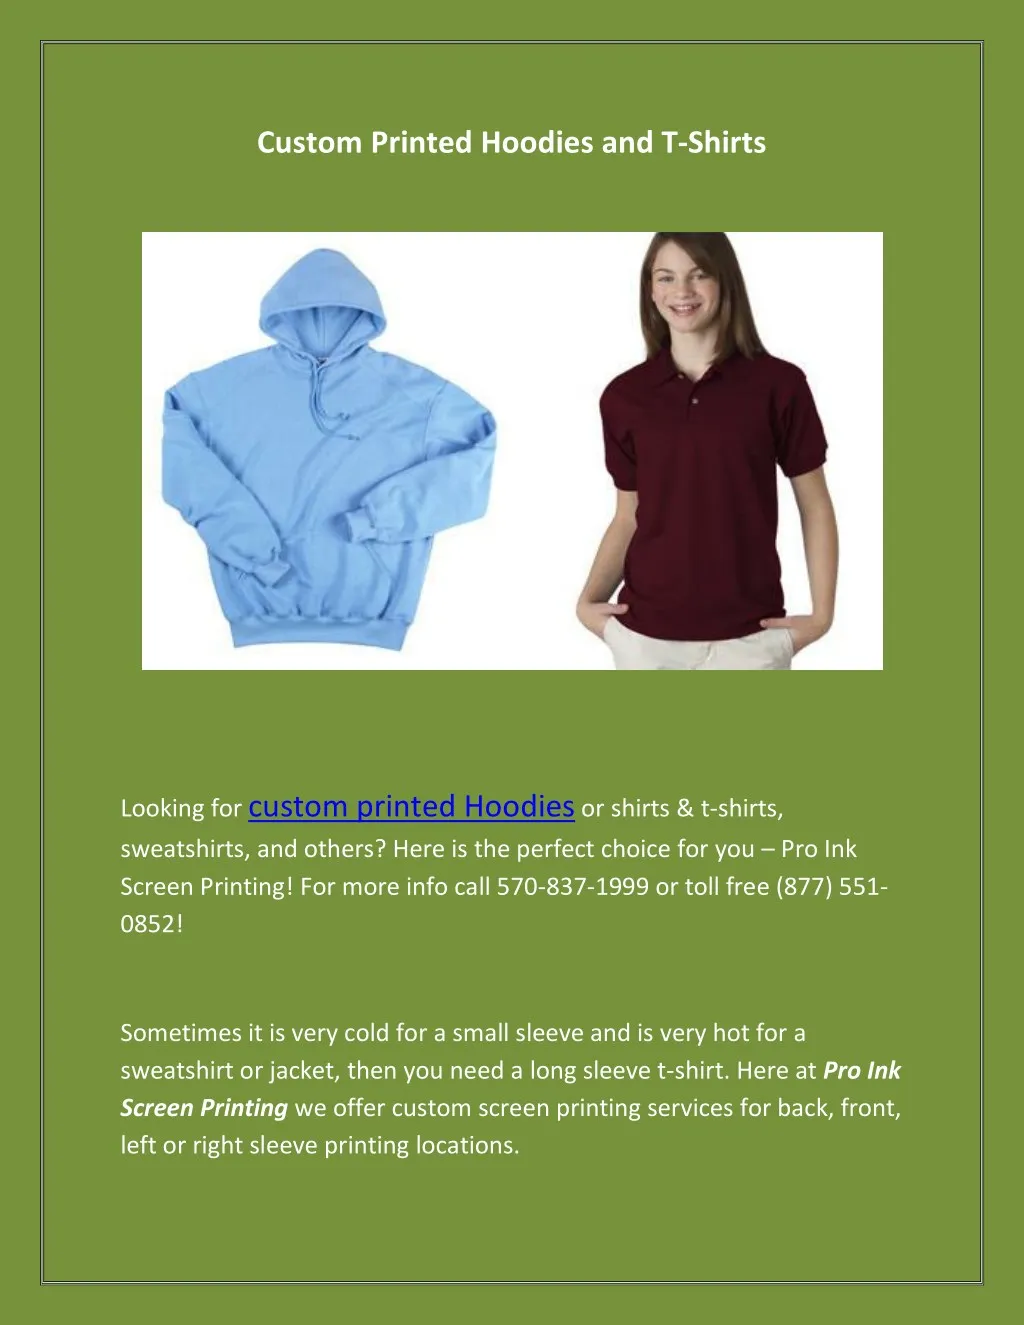 custom printed hoodies and t shirts